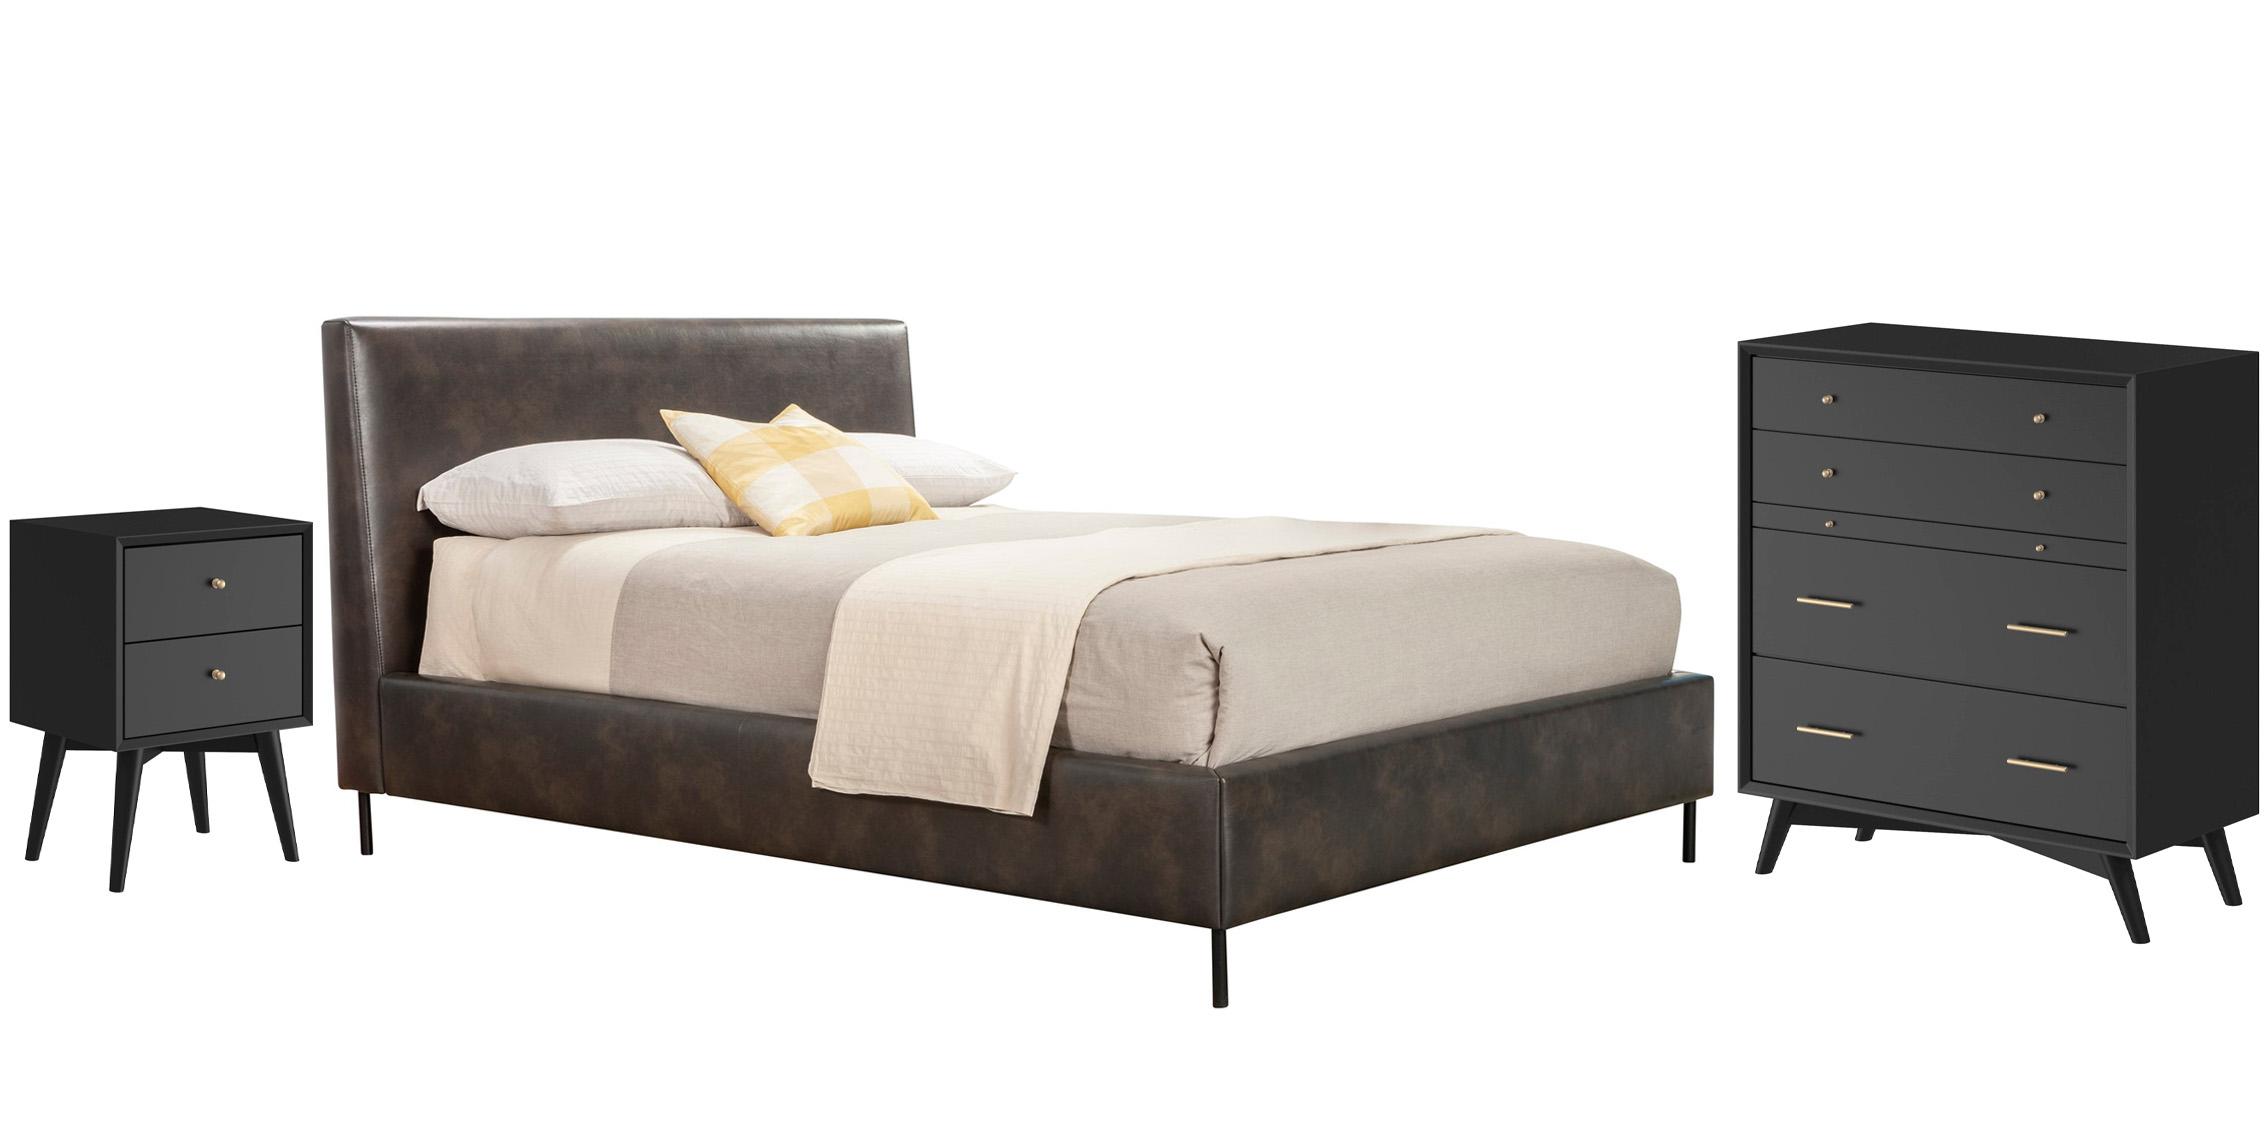 Modern Platform Bedroom Set SOPHIA / FLYNN 6902F-GRY-Set-3-BLK in Gray, Black Faux Leather